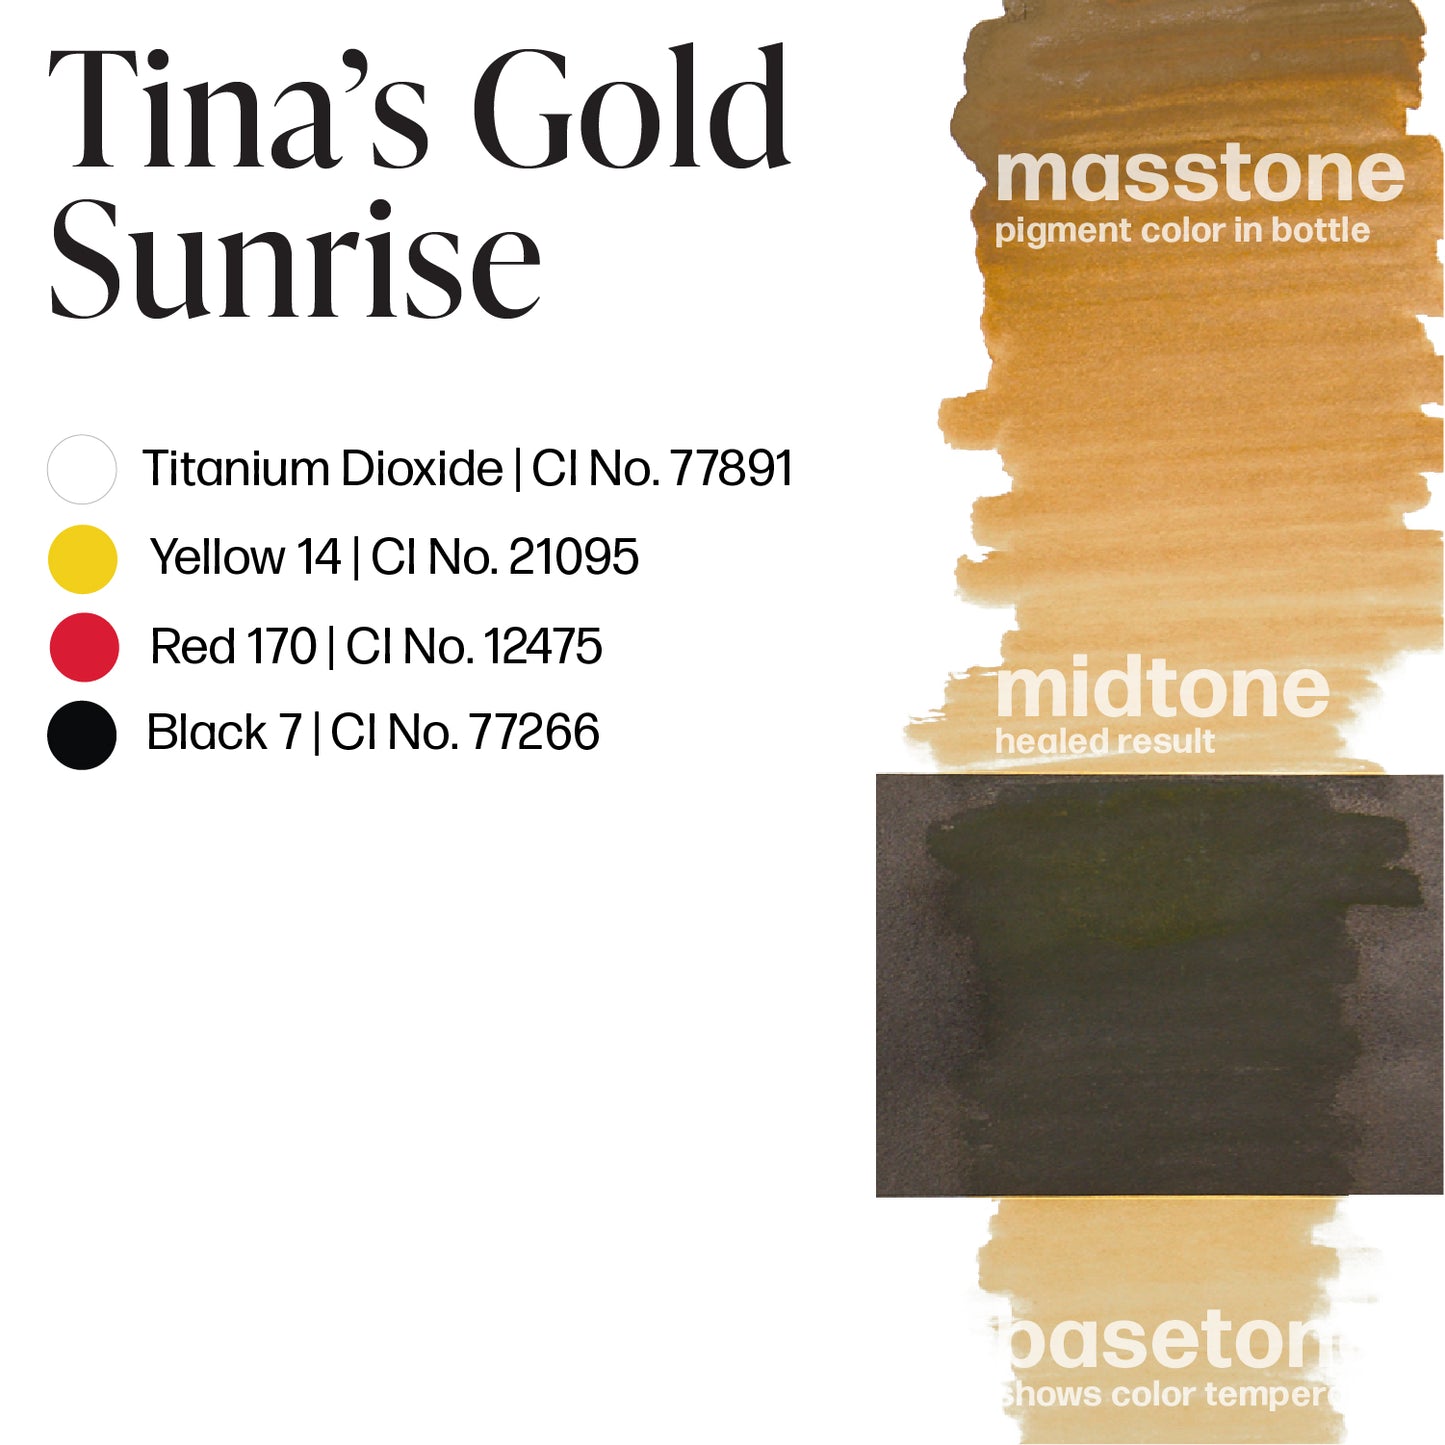 Tina's Gold Sunrise